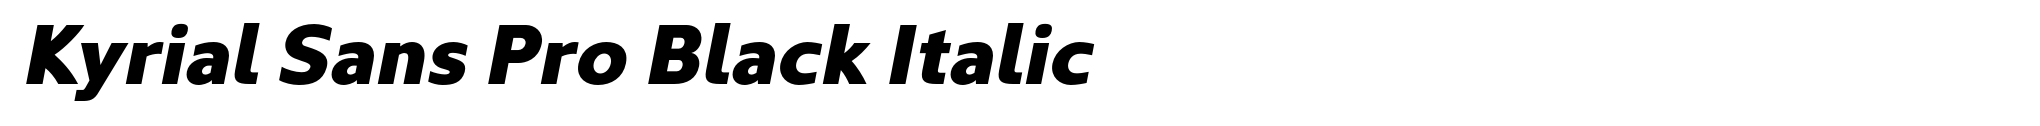 Kyrial Sans Pro Black Italic image